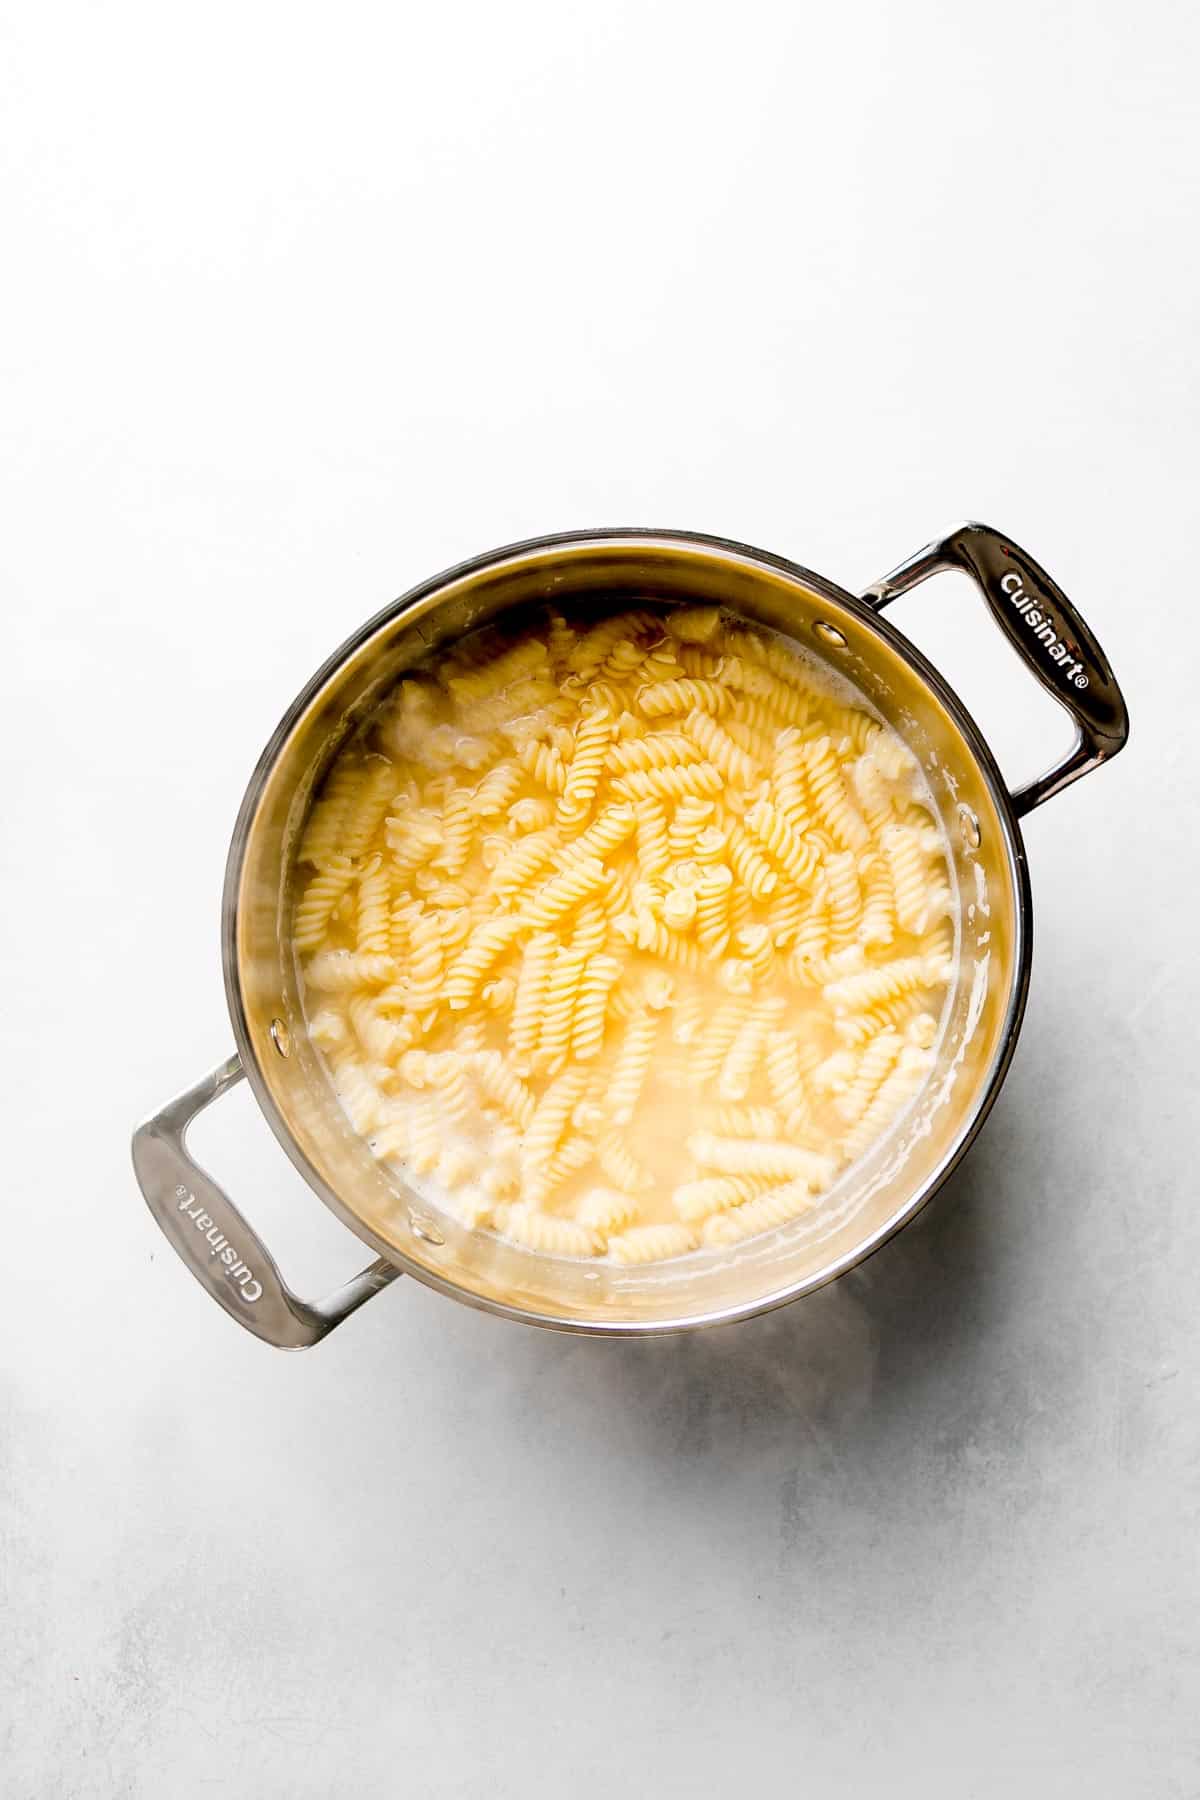 Gluten free pasta in pot of water.